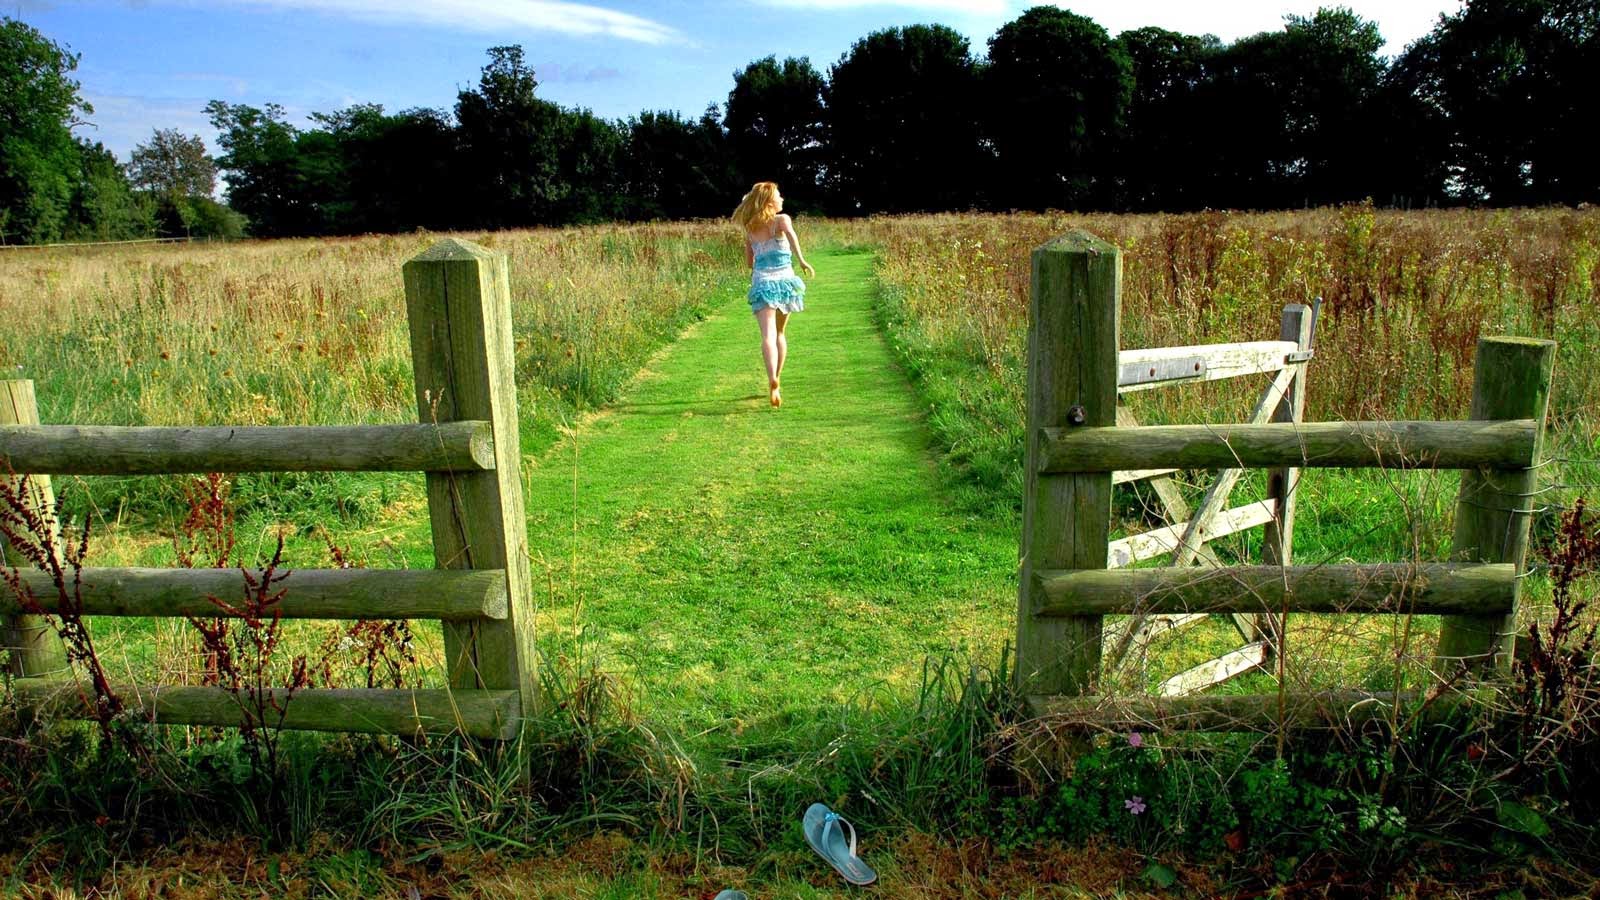 Beautiful Girl Running Landscape Nature Image